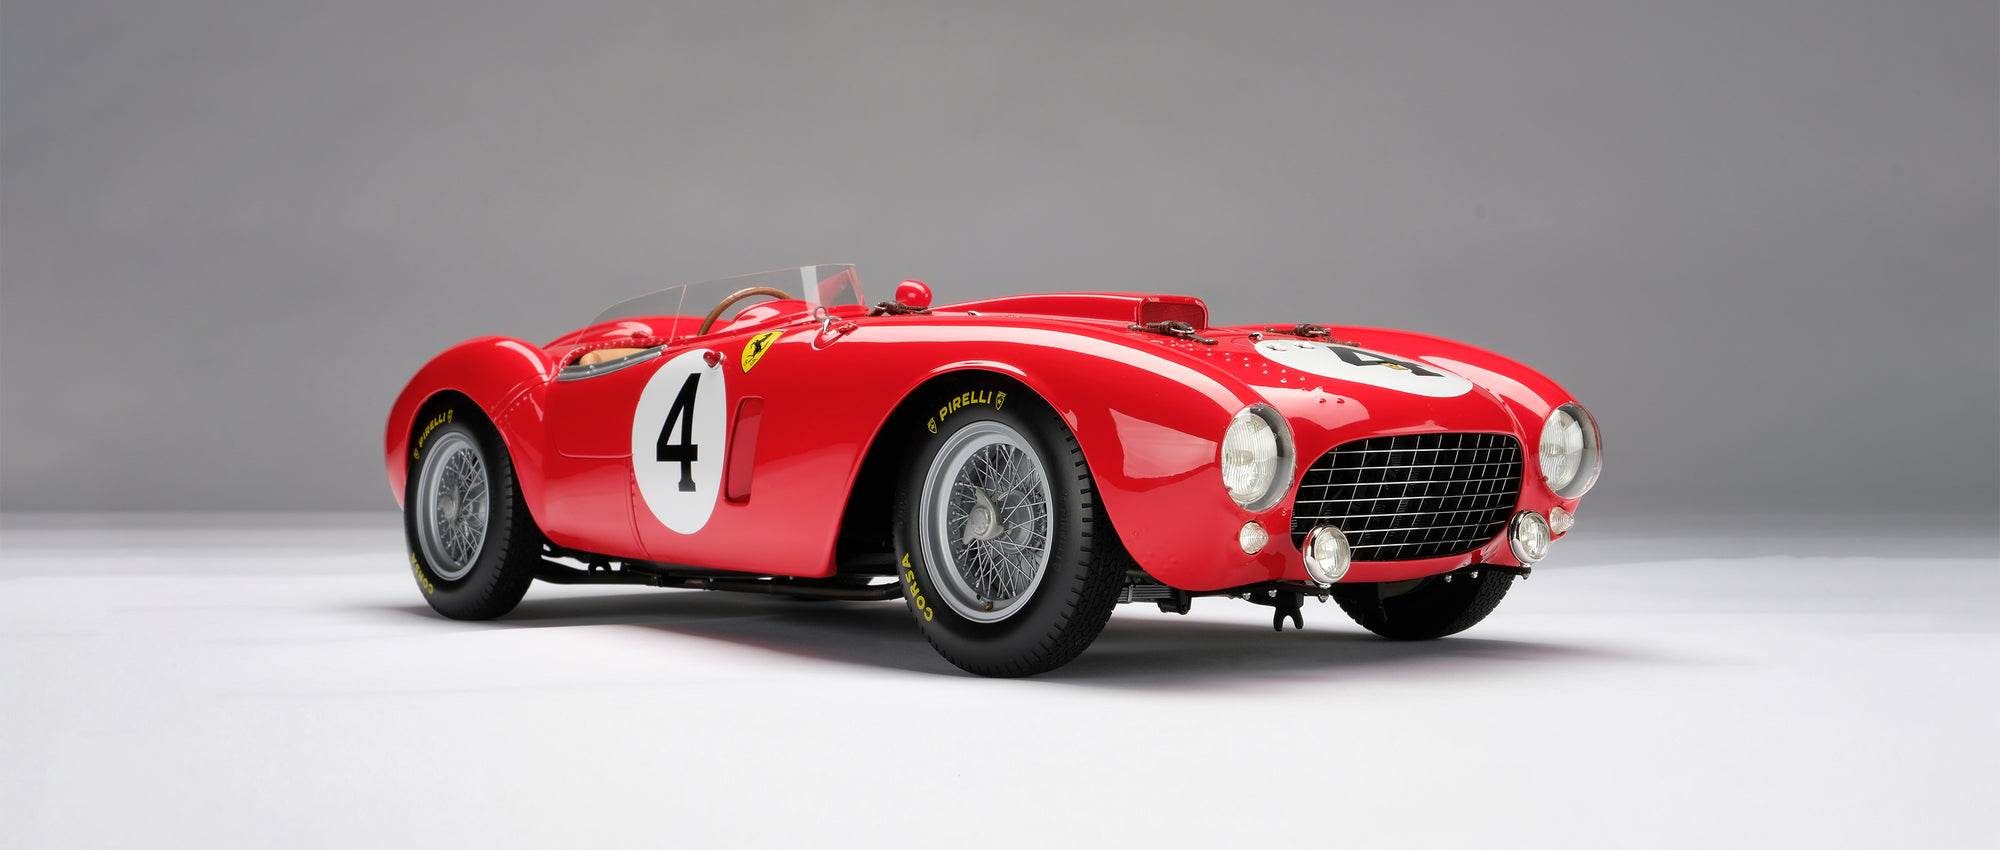 Ferrari 375 Plus - 1954 Le Mans Winner